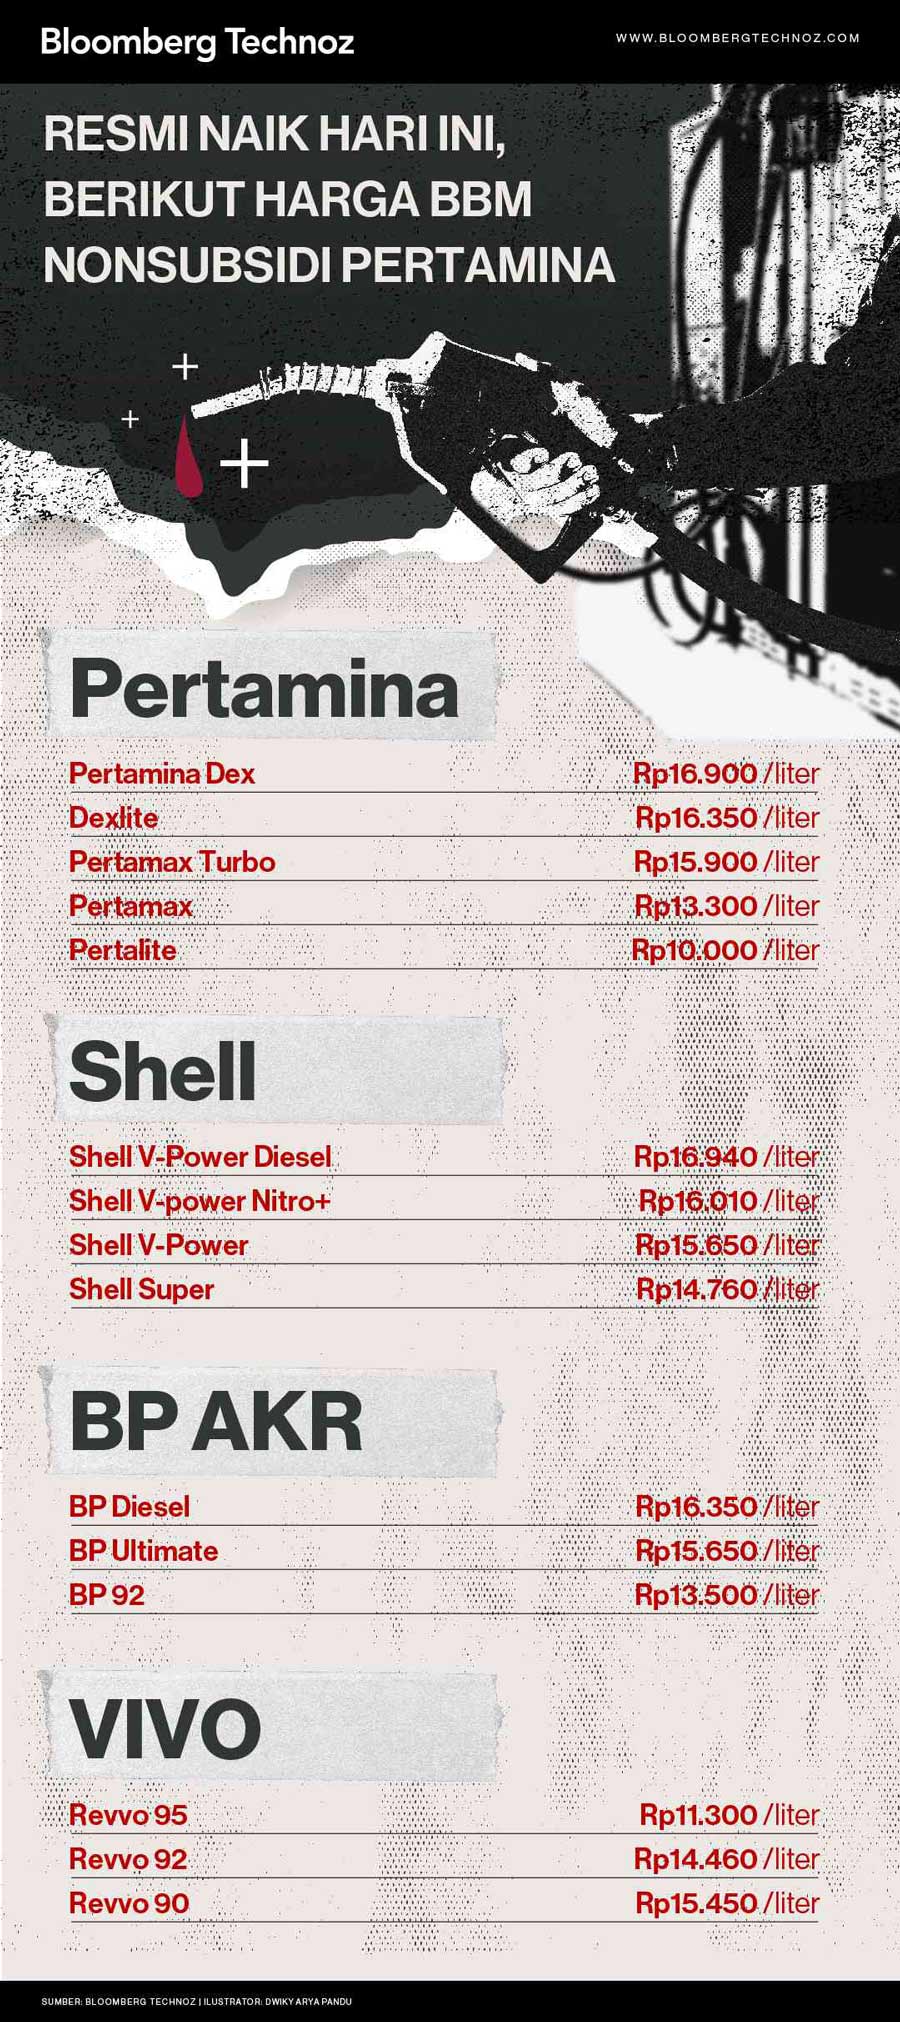 Daftar Terbaru Harga BBM Pertamina, Shell, Vivo dan BP AKR (Infografis/Bloomberg Technoz)